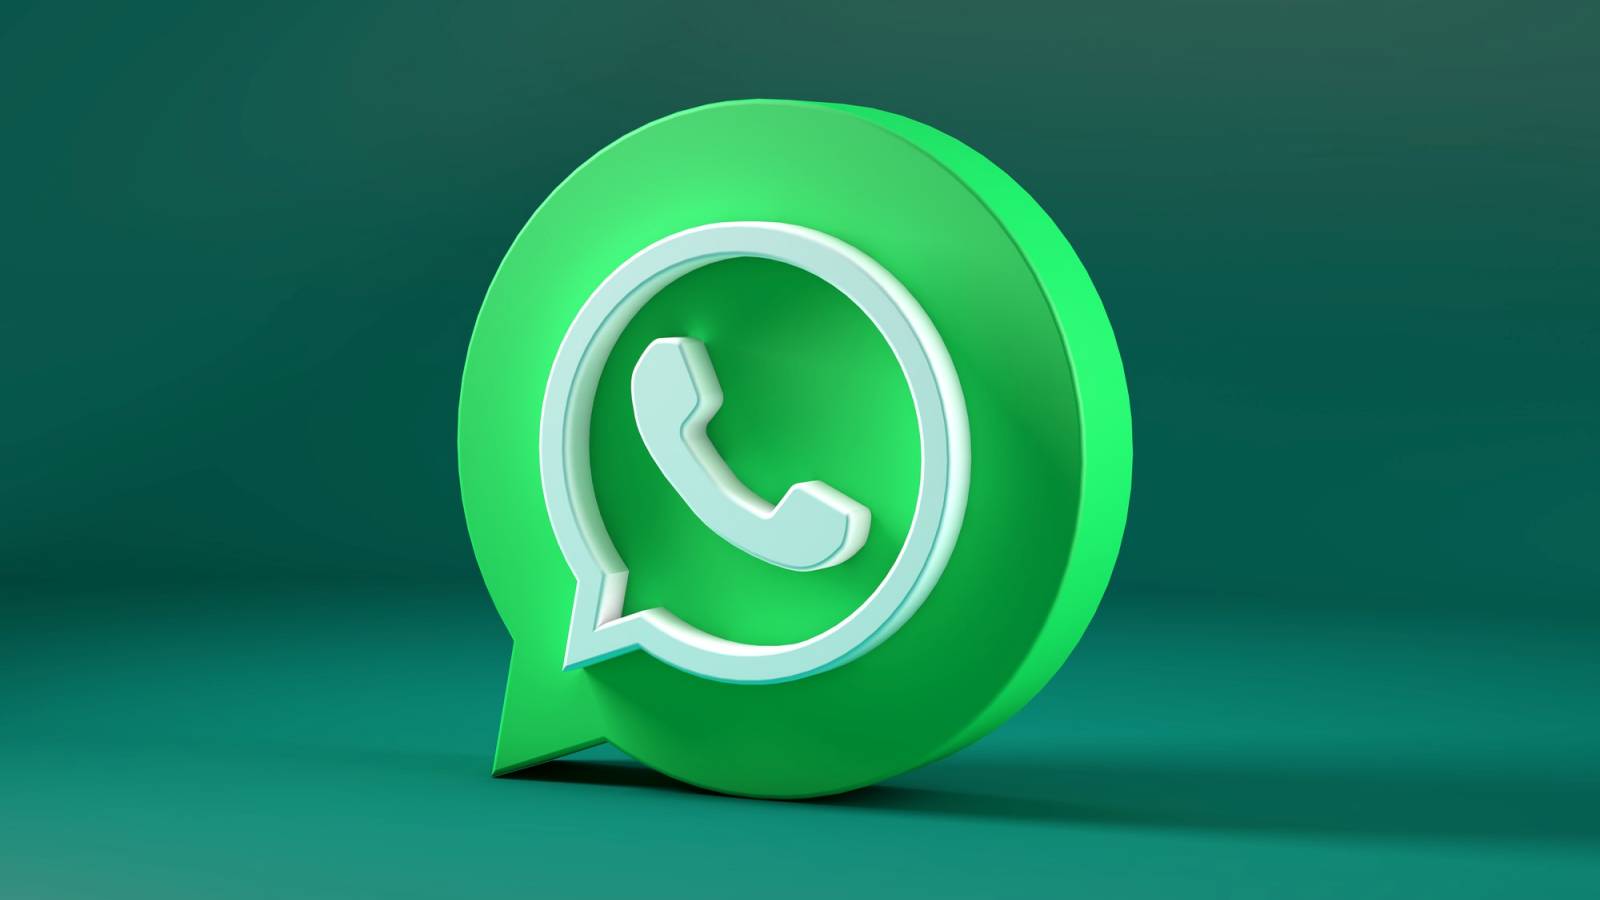 WhatsApp Made SECRET Major Change The Developed iPhone Application